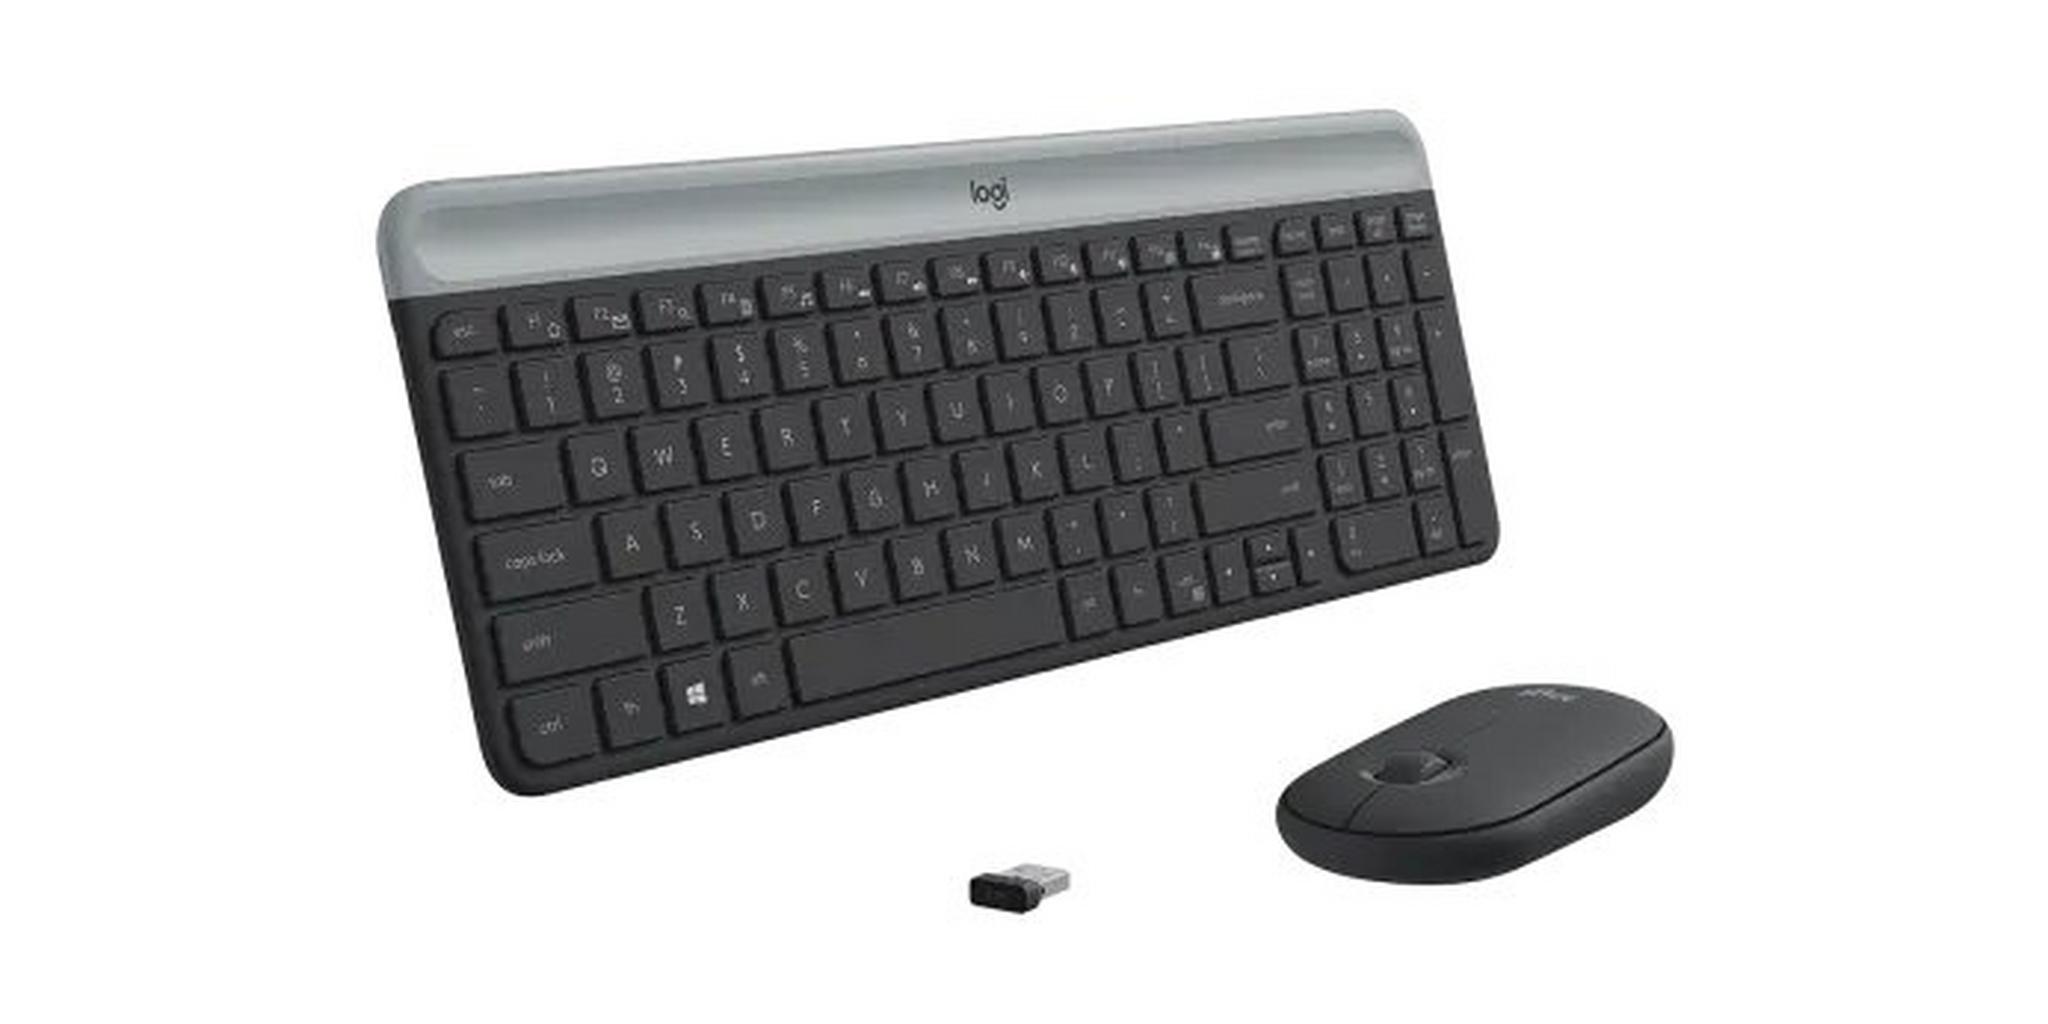 Logitech M750 Slim Keyboard & Mouse Combo - Graphite